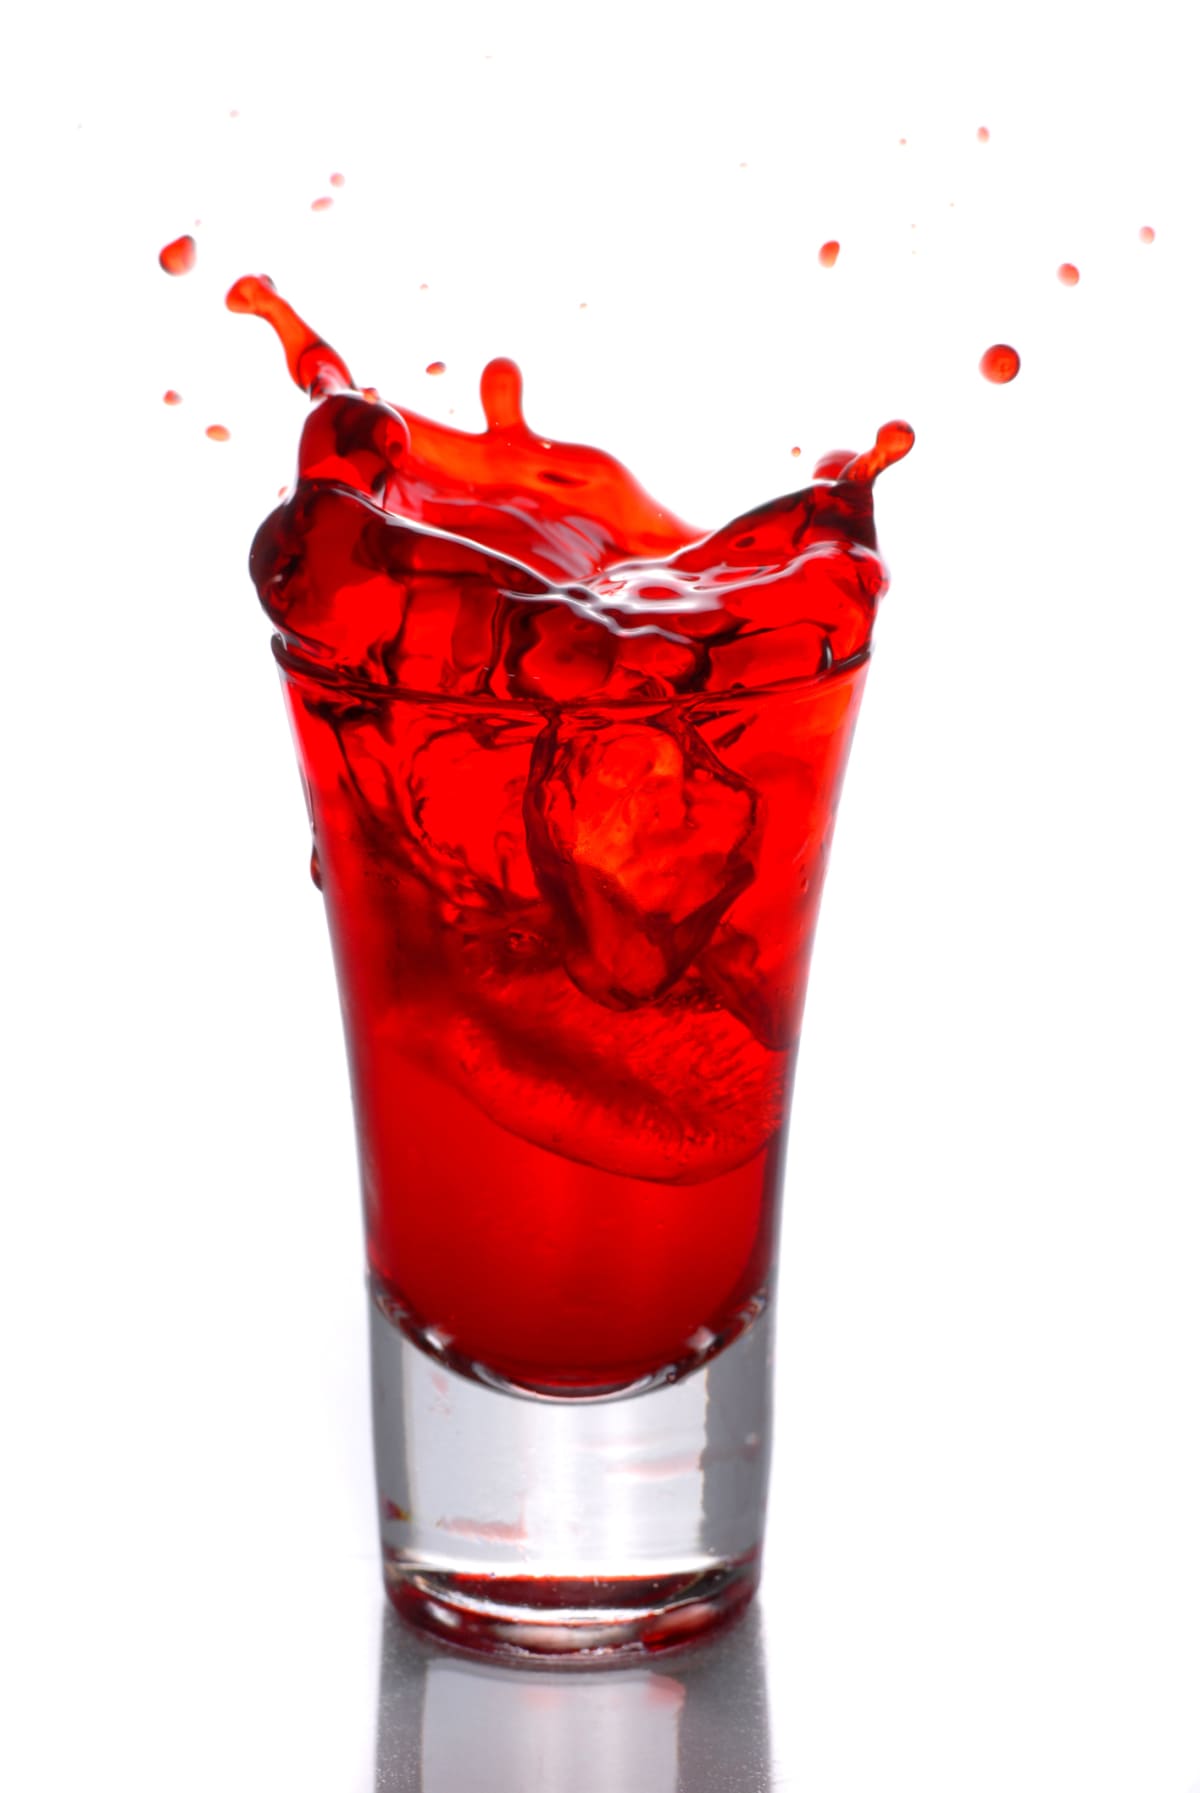 Red liquor in a shot